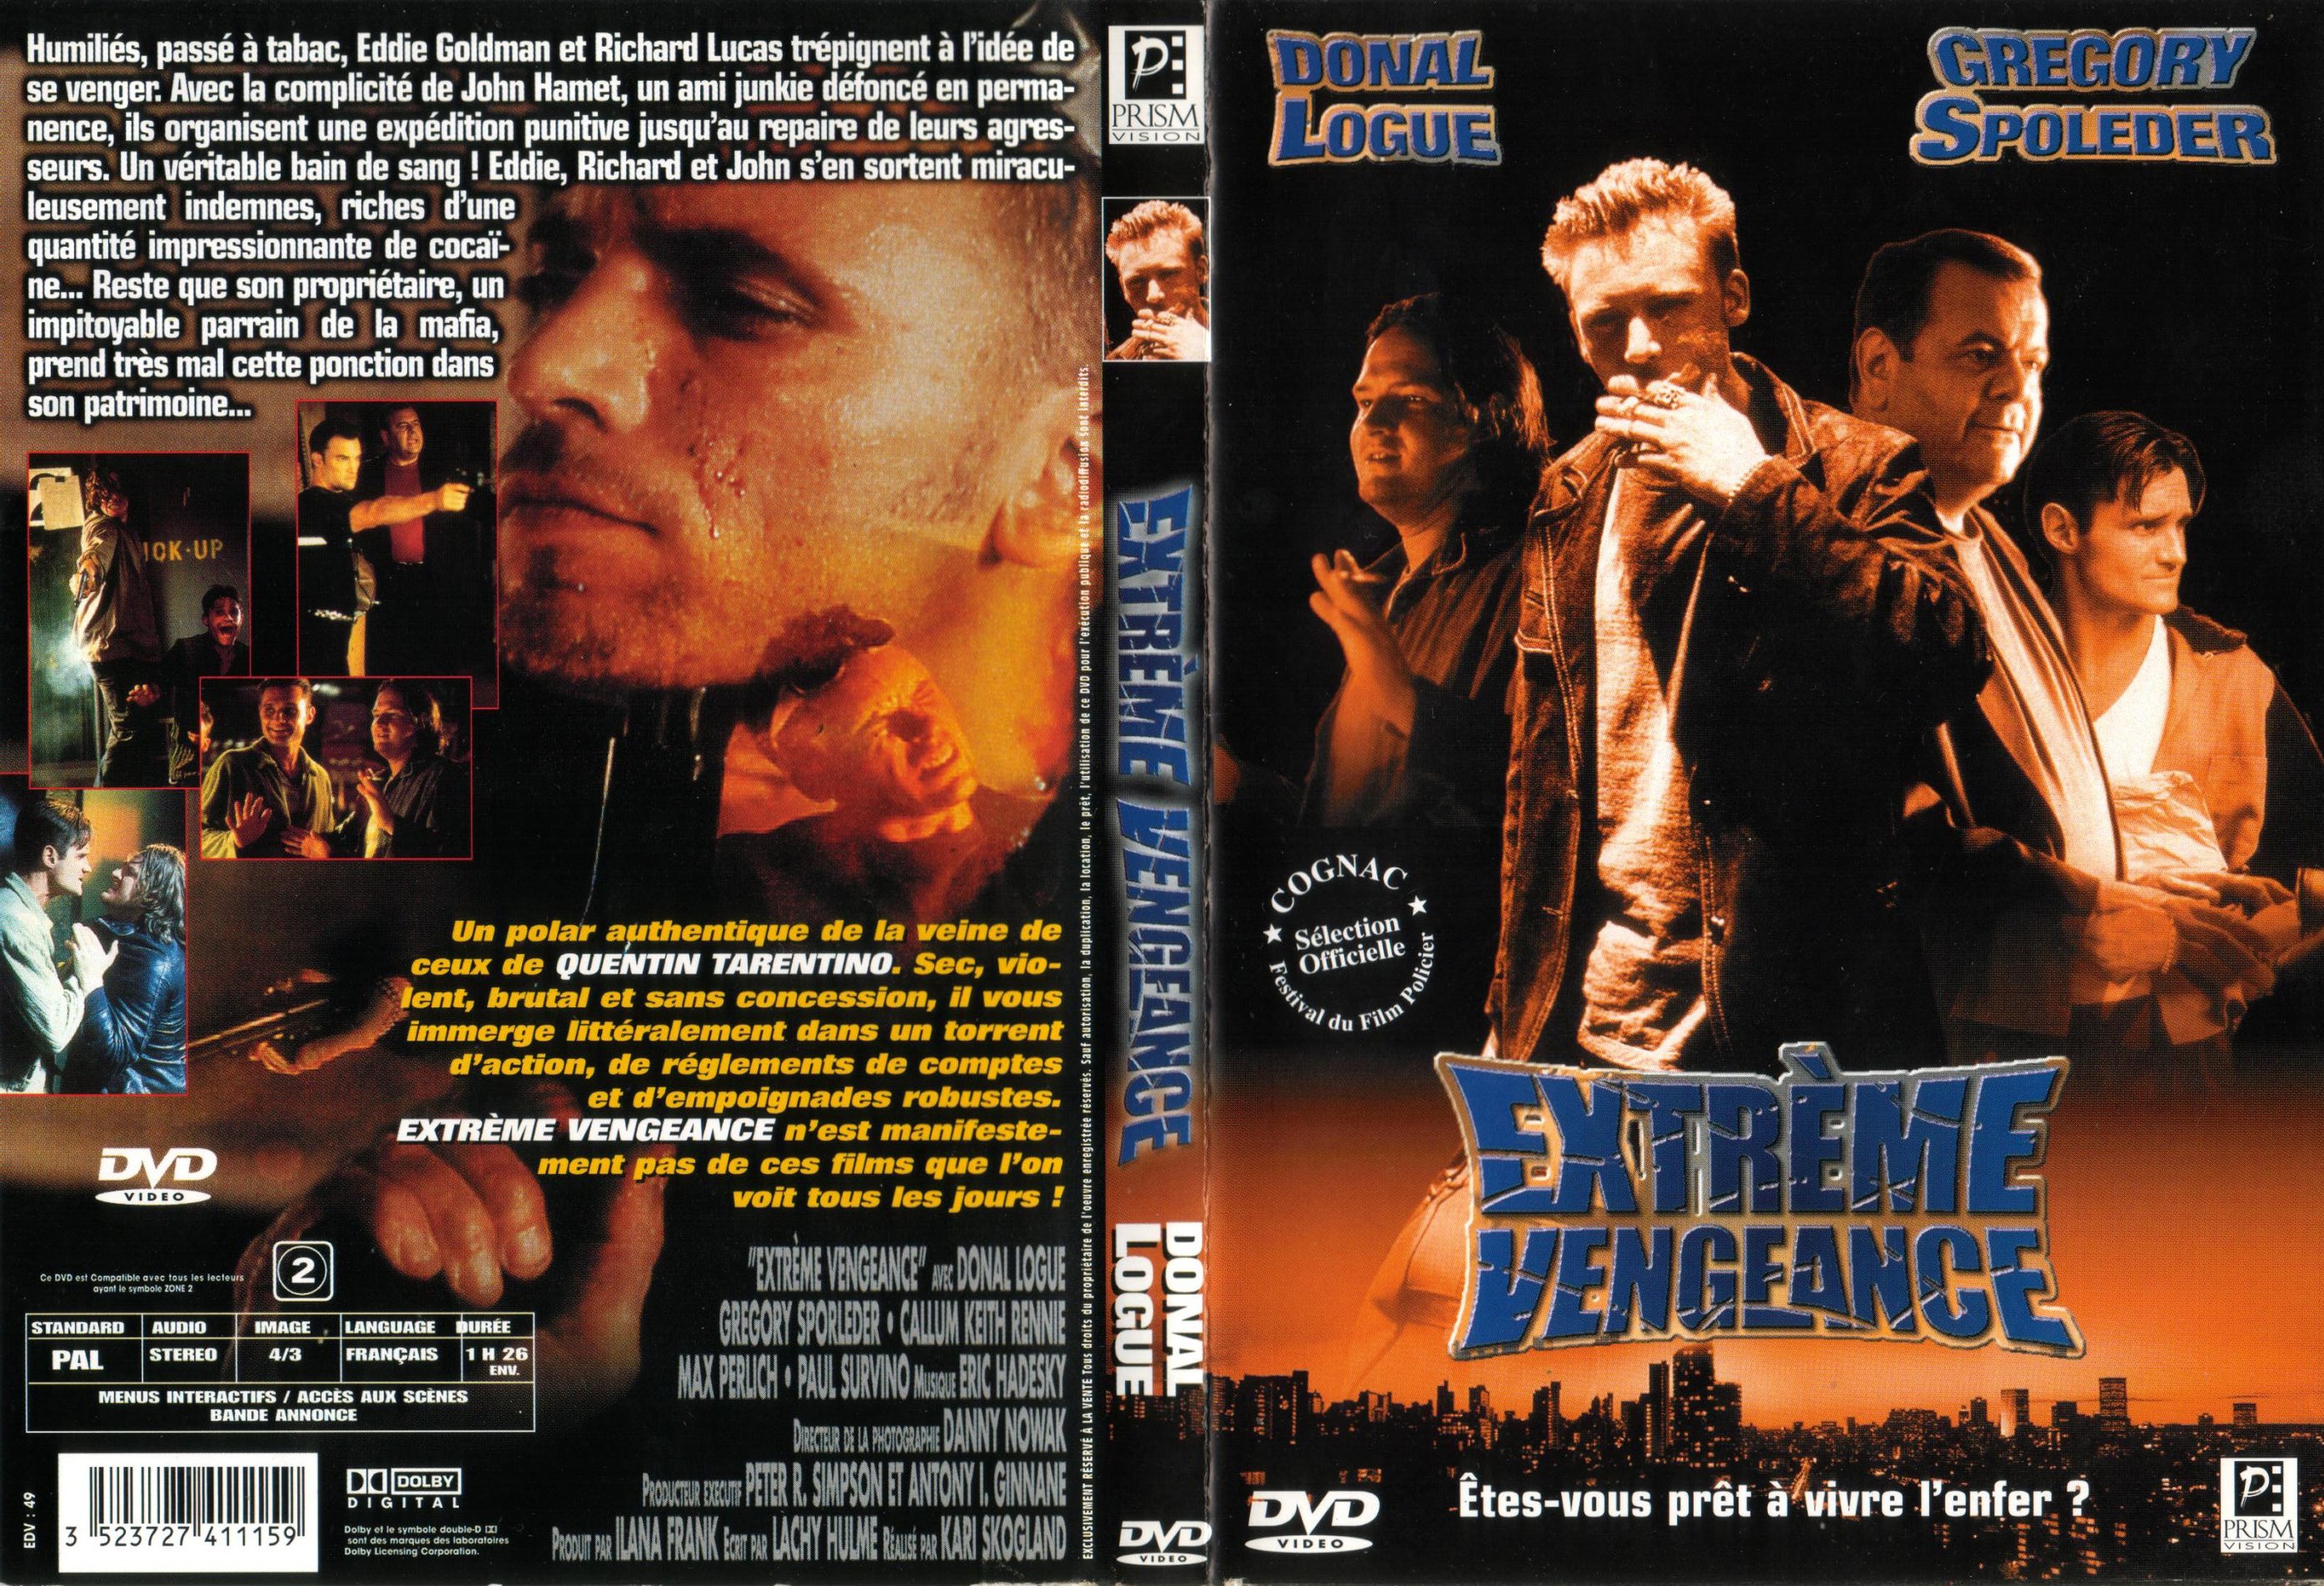 Jaquette DVD Extreme vengeance